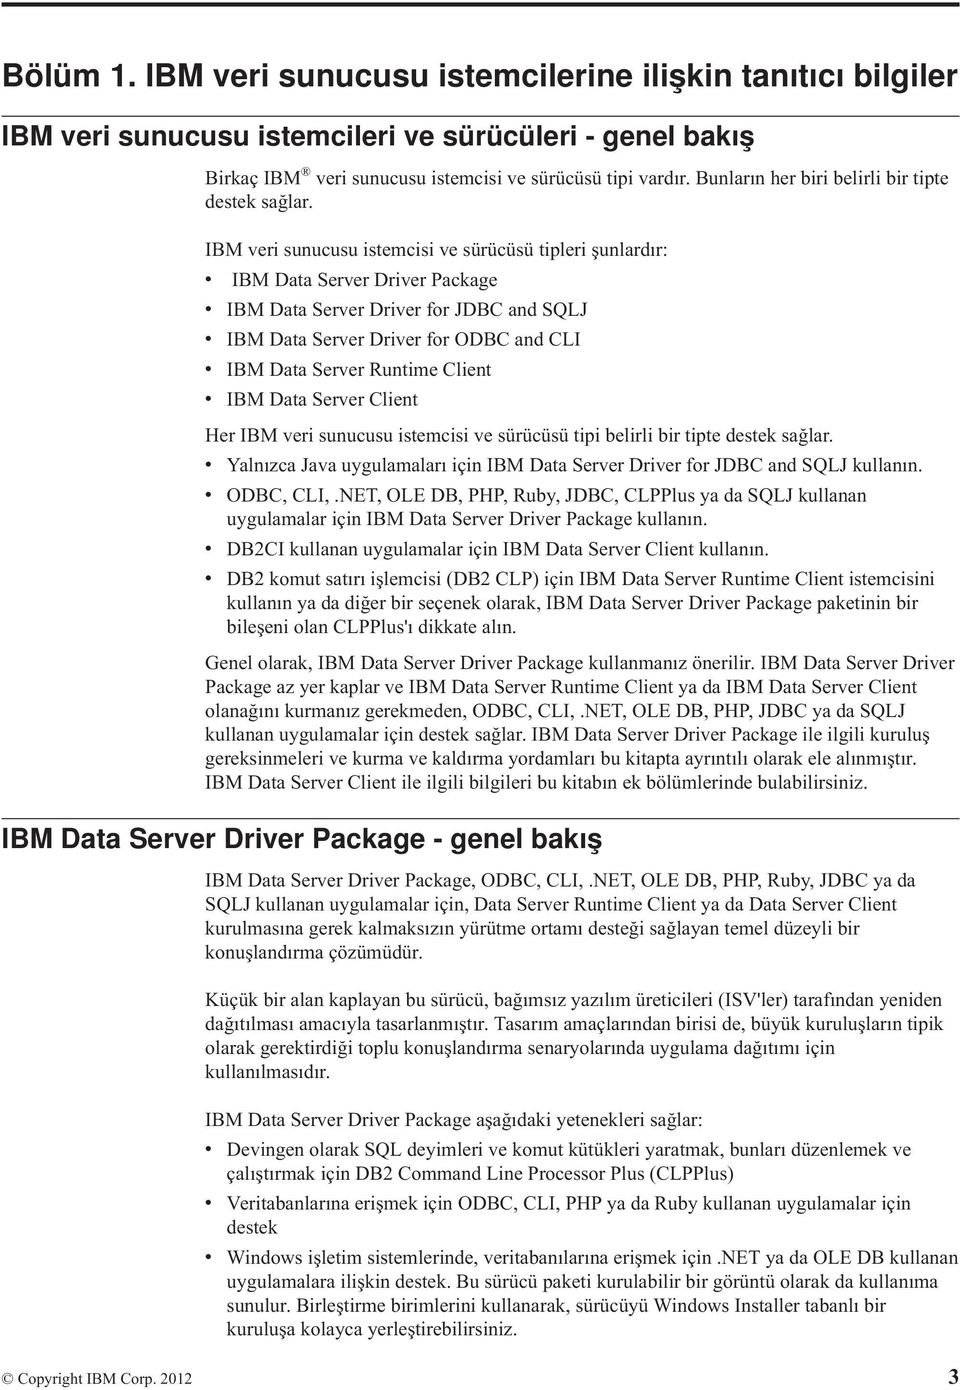 IBM veri sunucusu istemcisi ve sürücüsü tipleri şunlardır: v IBM Data Server Driver Package v IBM Data Server Driver for JDBC and SQLJ v IBM Data Server Driver for ODBC and CLI v IBM Data Server